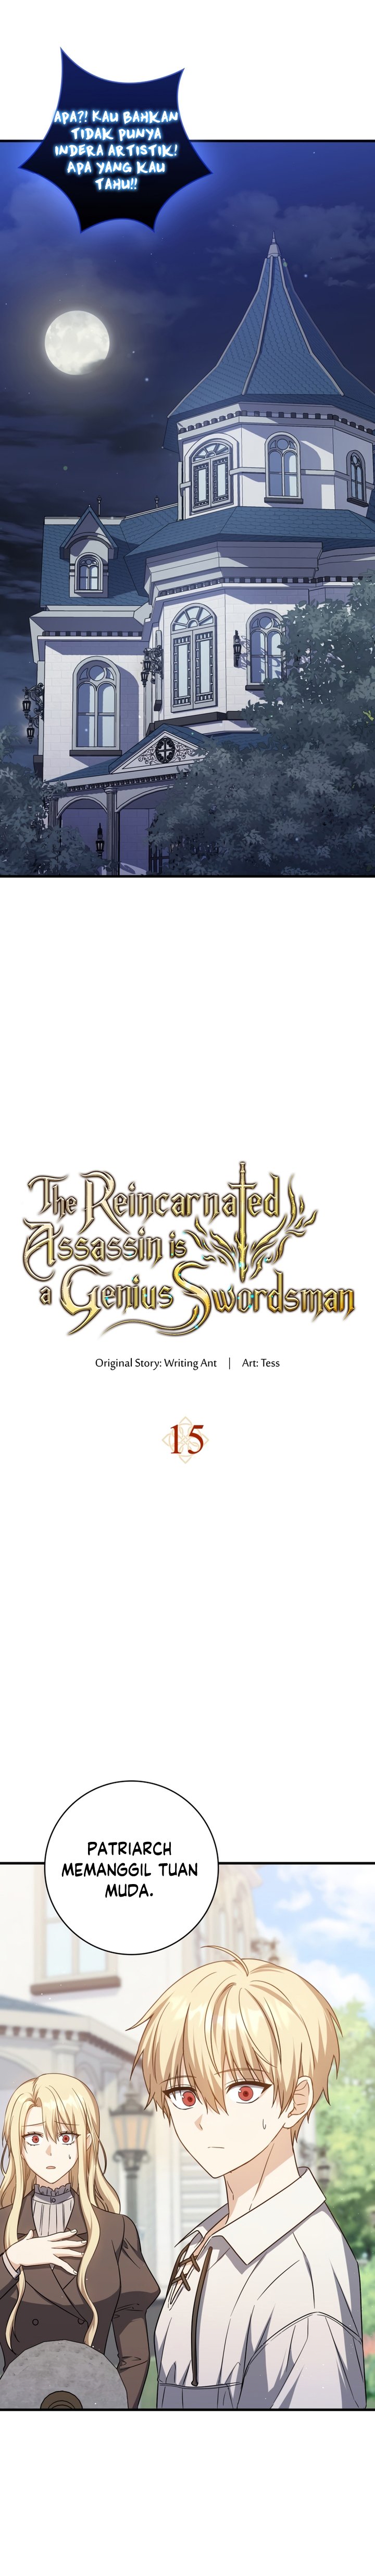 The Reincarnated Assassin Is A Genius Swordsman Chapter 15